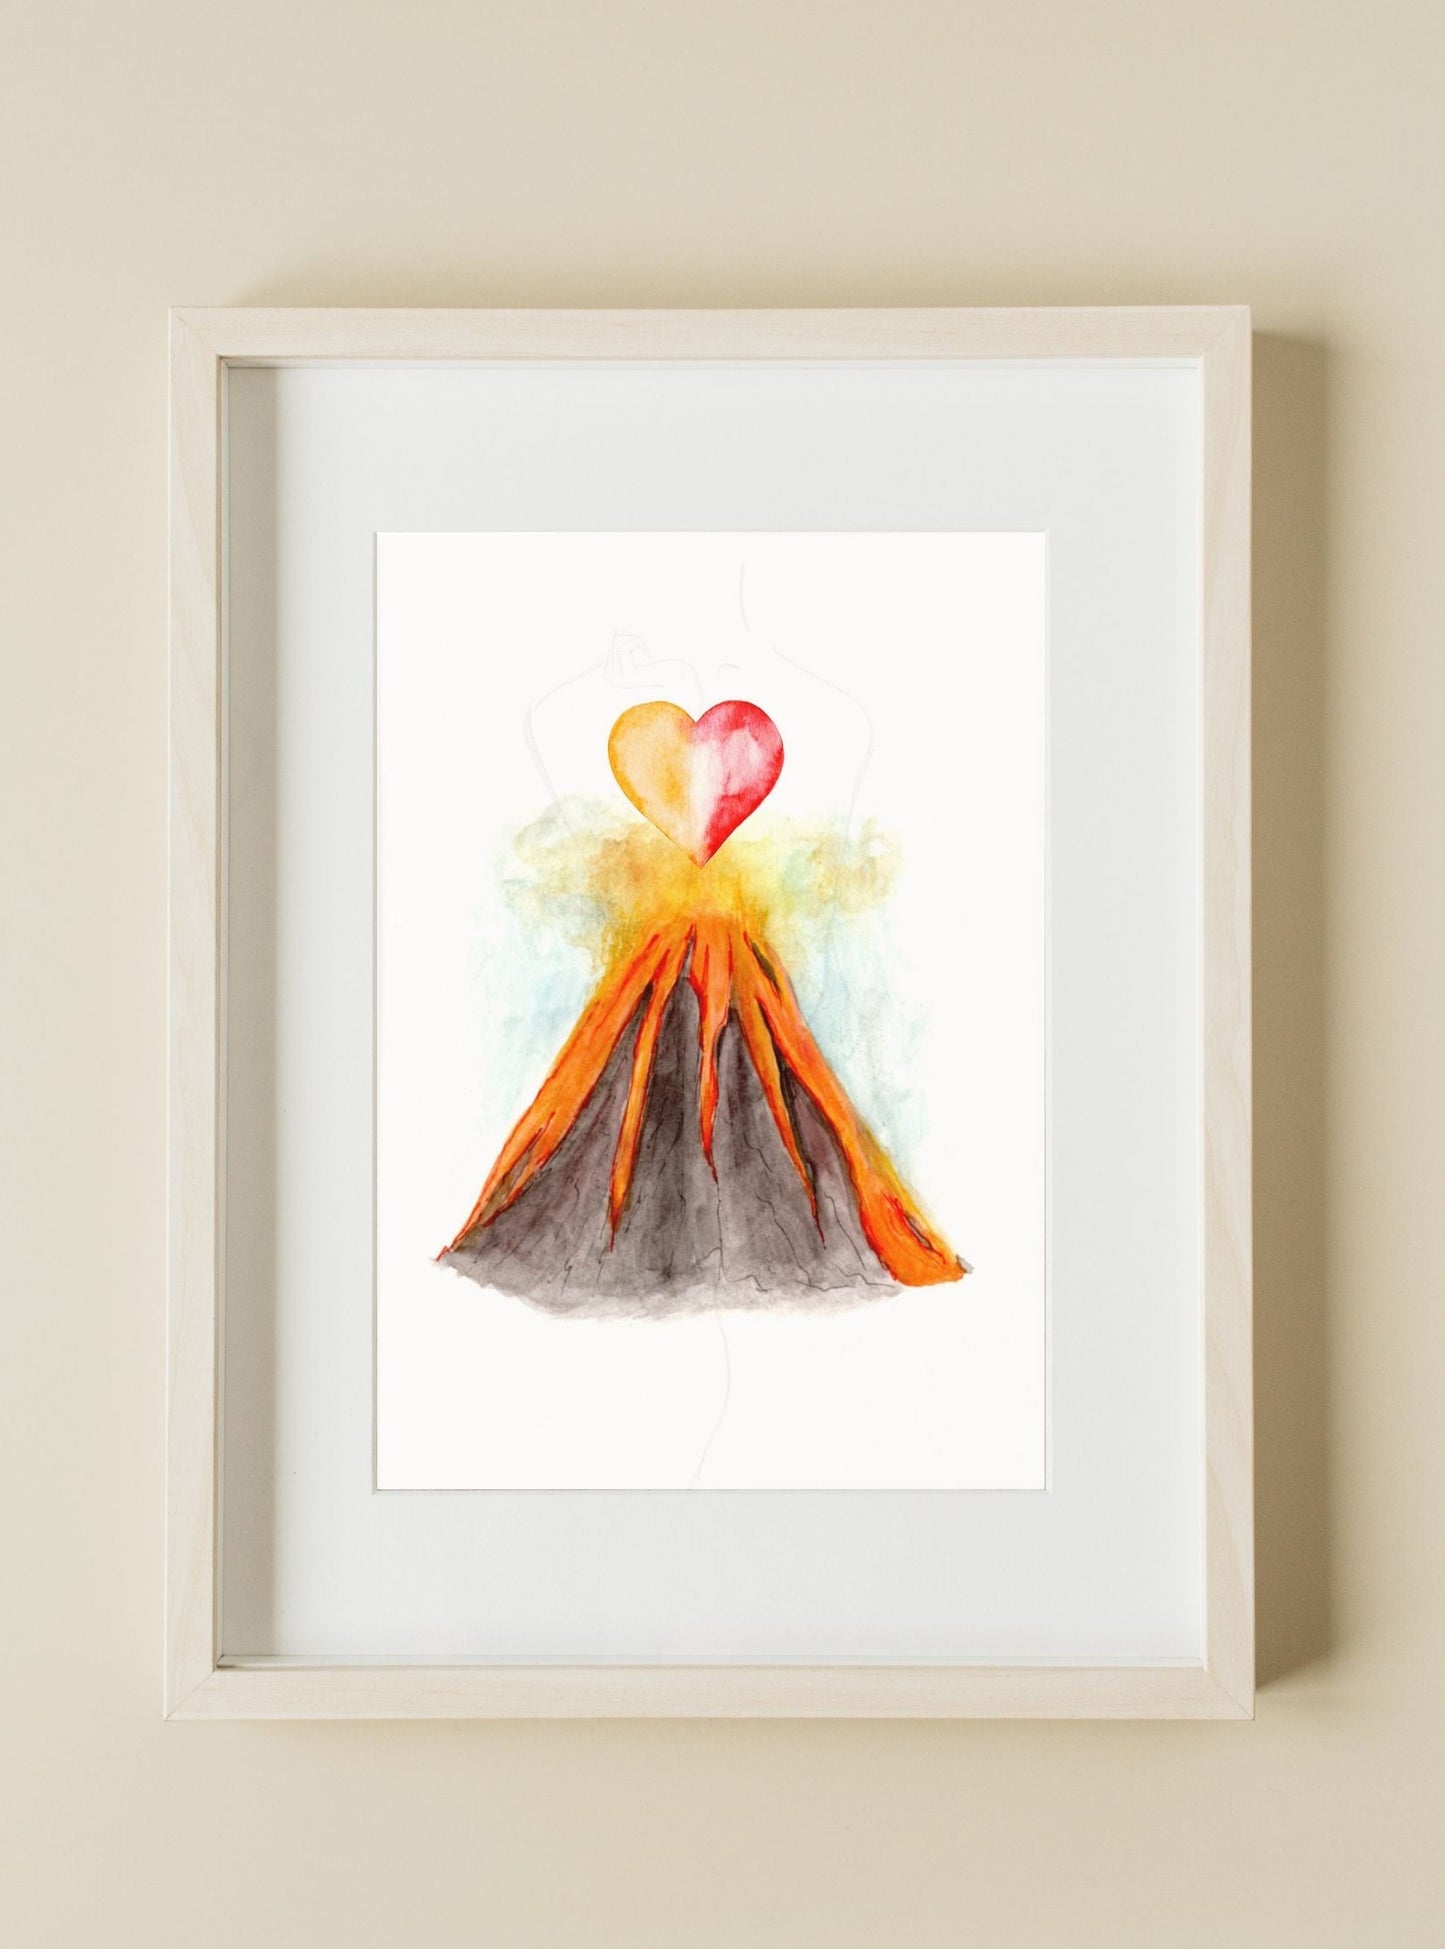 Volcano art print, Volcano love, Anniversary gift, Nursery decor, Baby shower gift, Cute wall decor, Gallery wall art, Cute volcano print